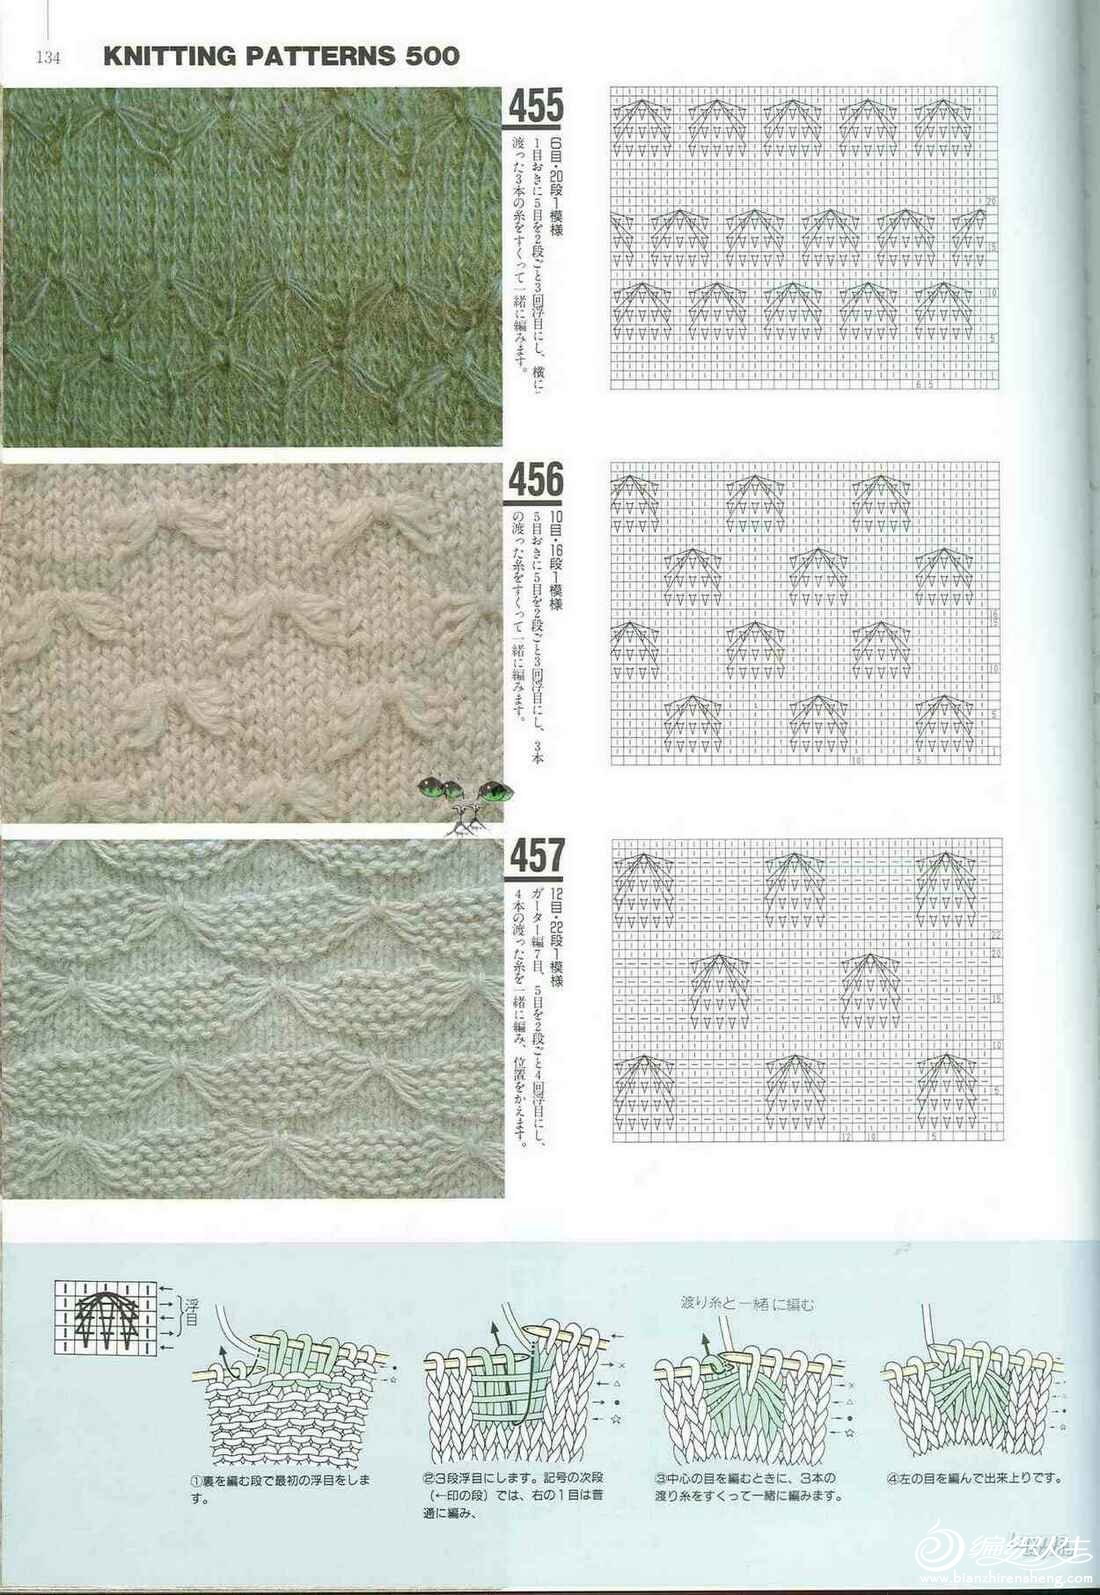 Knitting Patterns 500 131.jpg